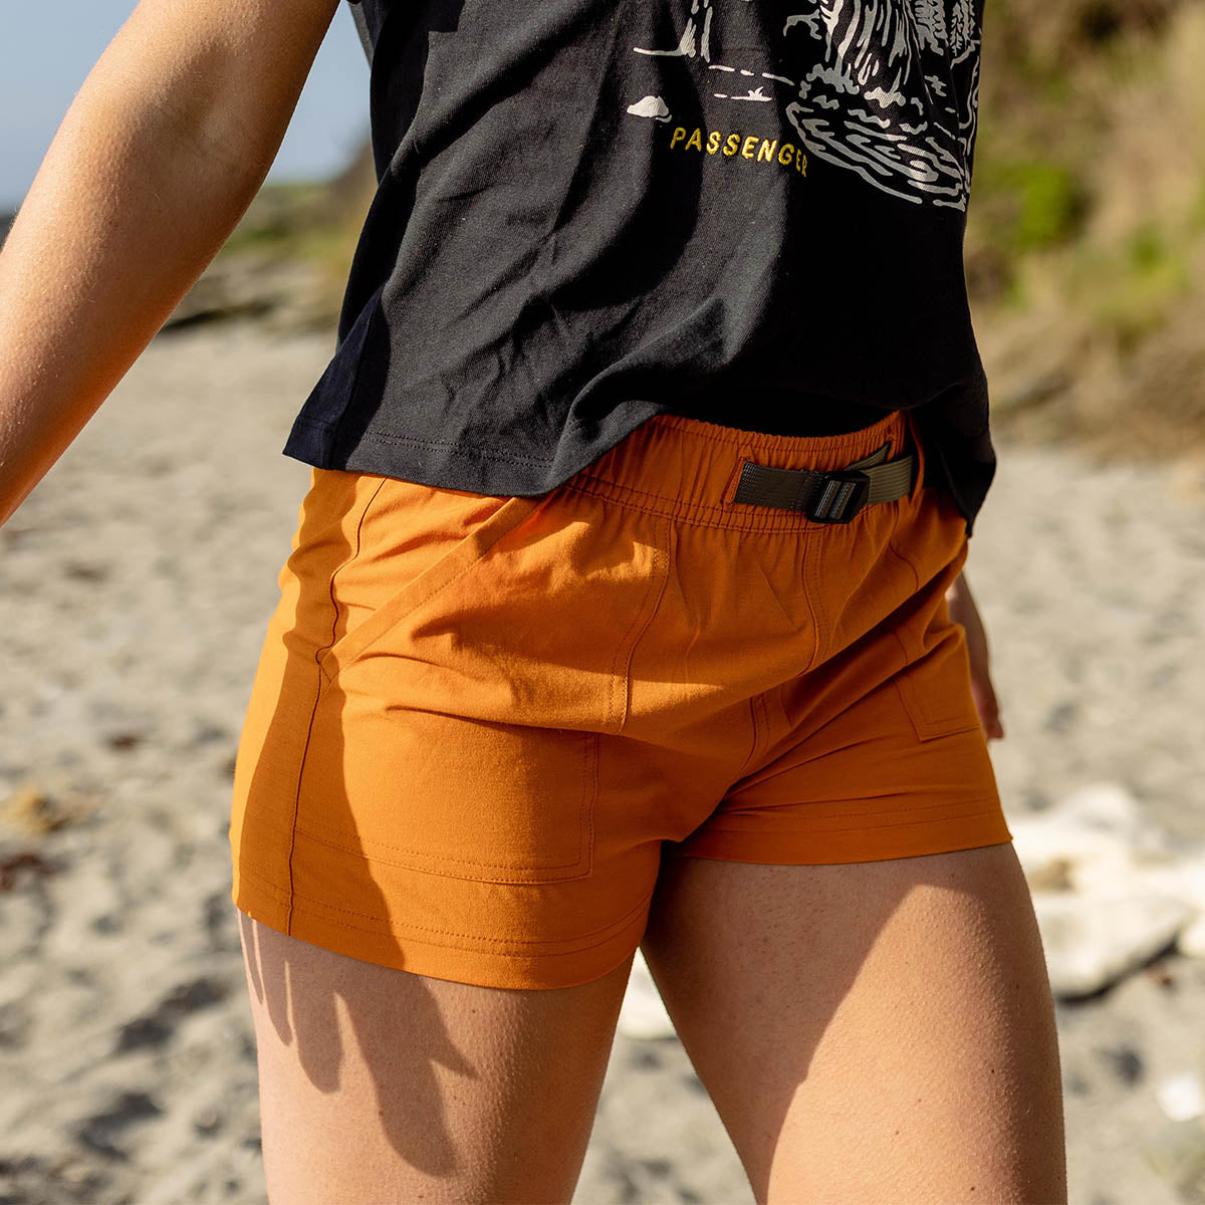 Passenger Clothing Del Sur Hemp All Purpose Shorts Women Shorts Liquidation Sunrise Orange - 2